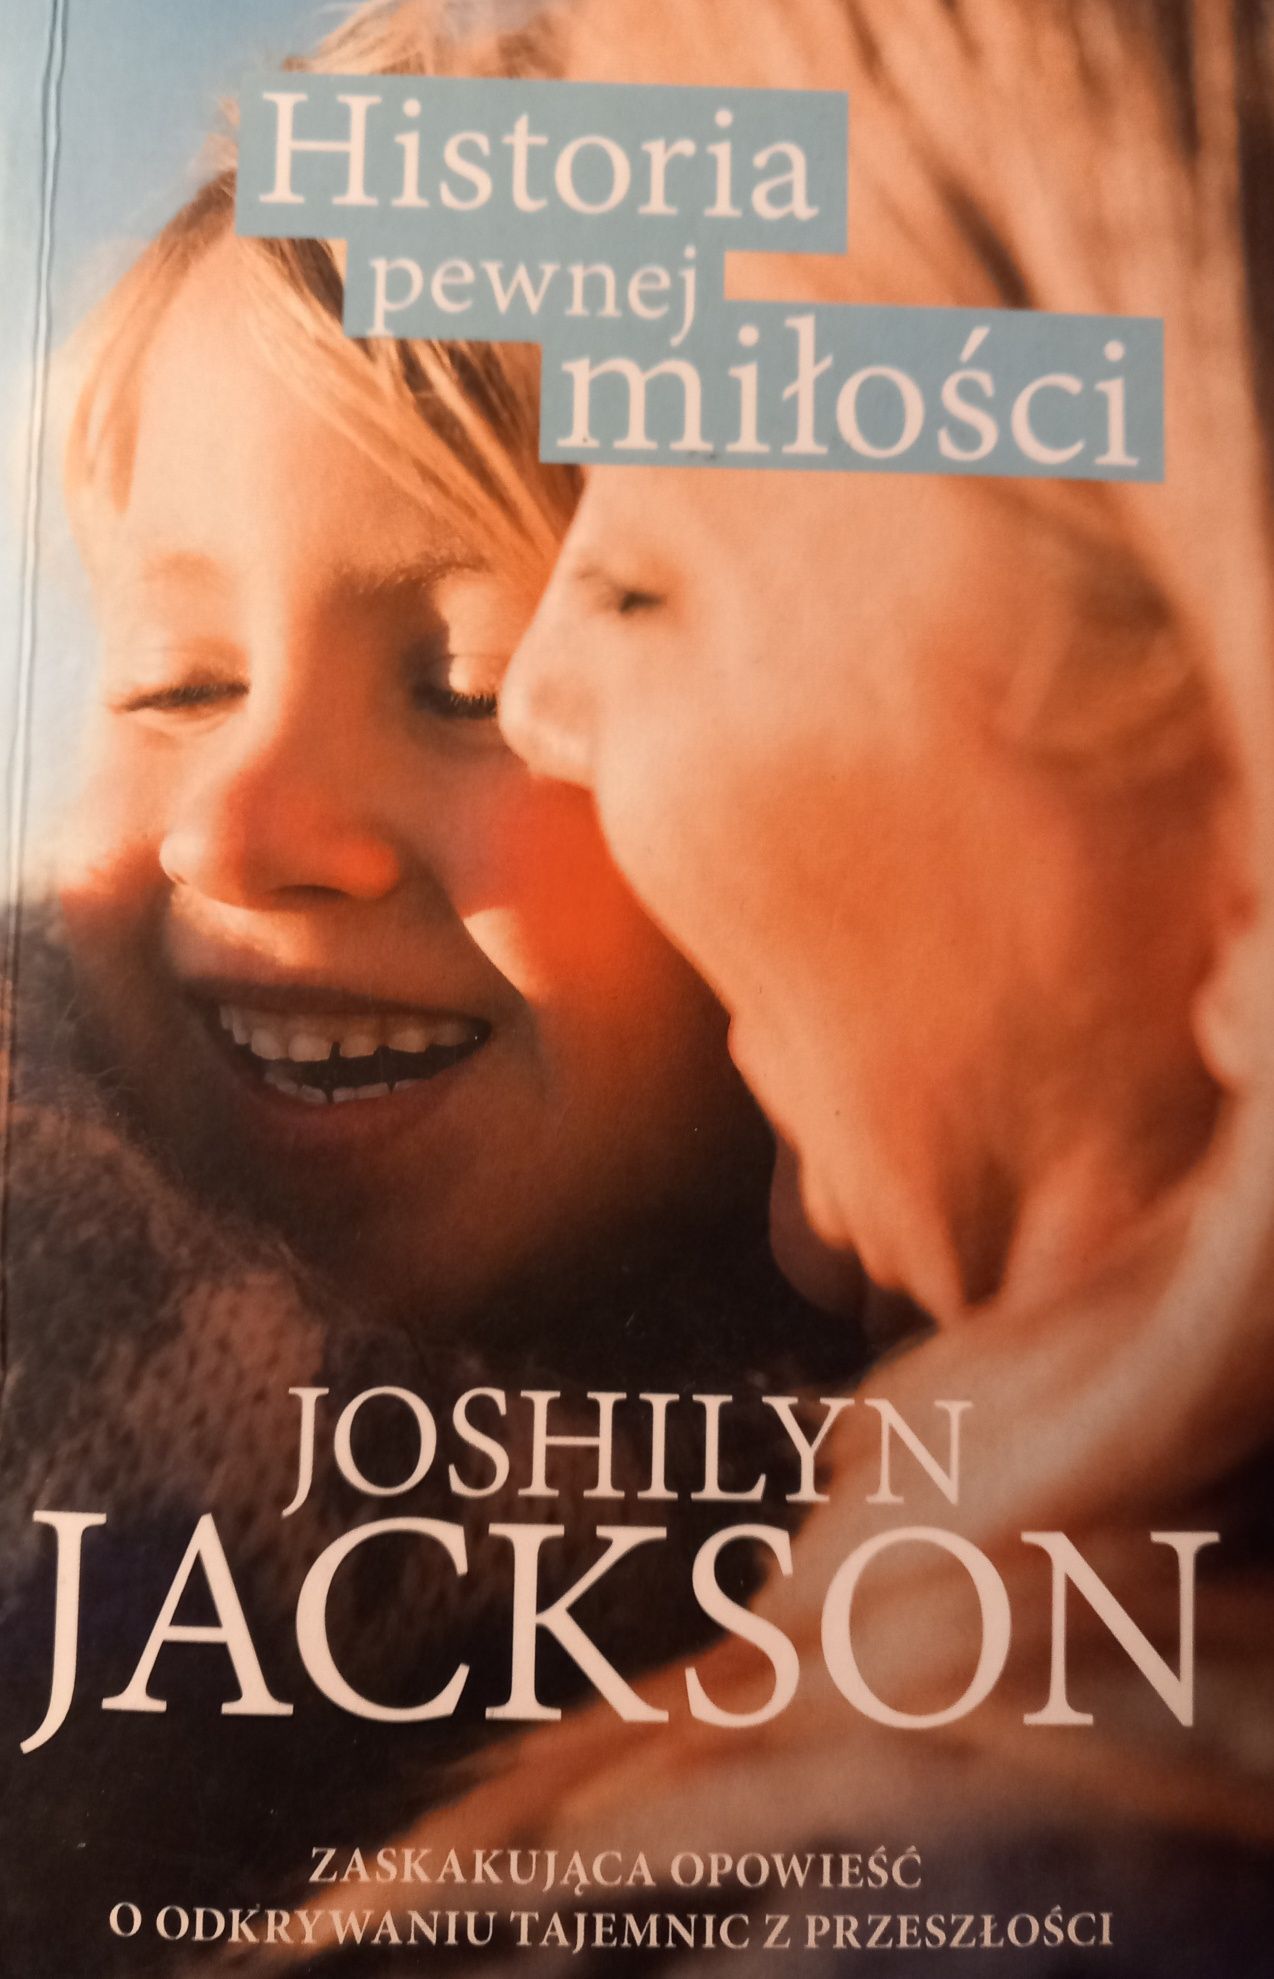 Joshilyn Jackson "Historia pewnej miłości "